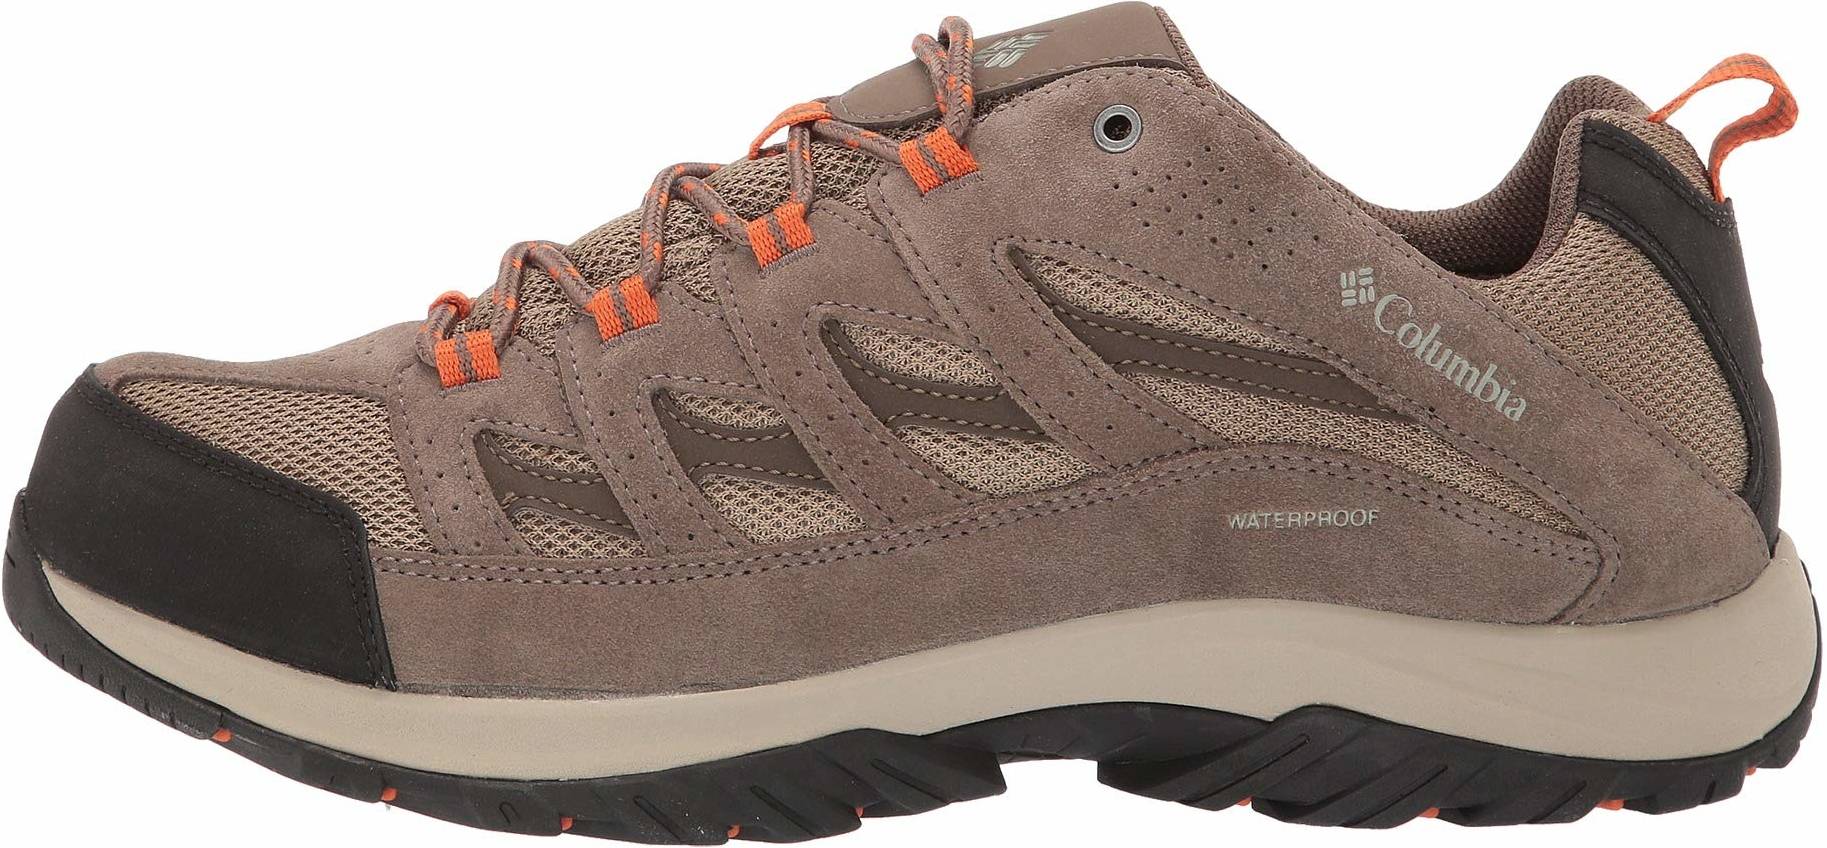 columbia men's crestwood hiking shoe